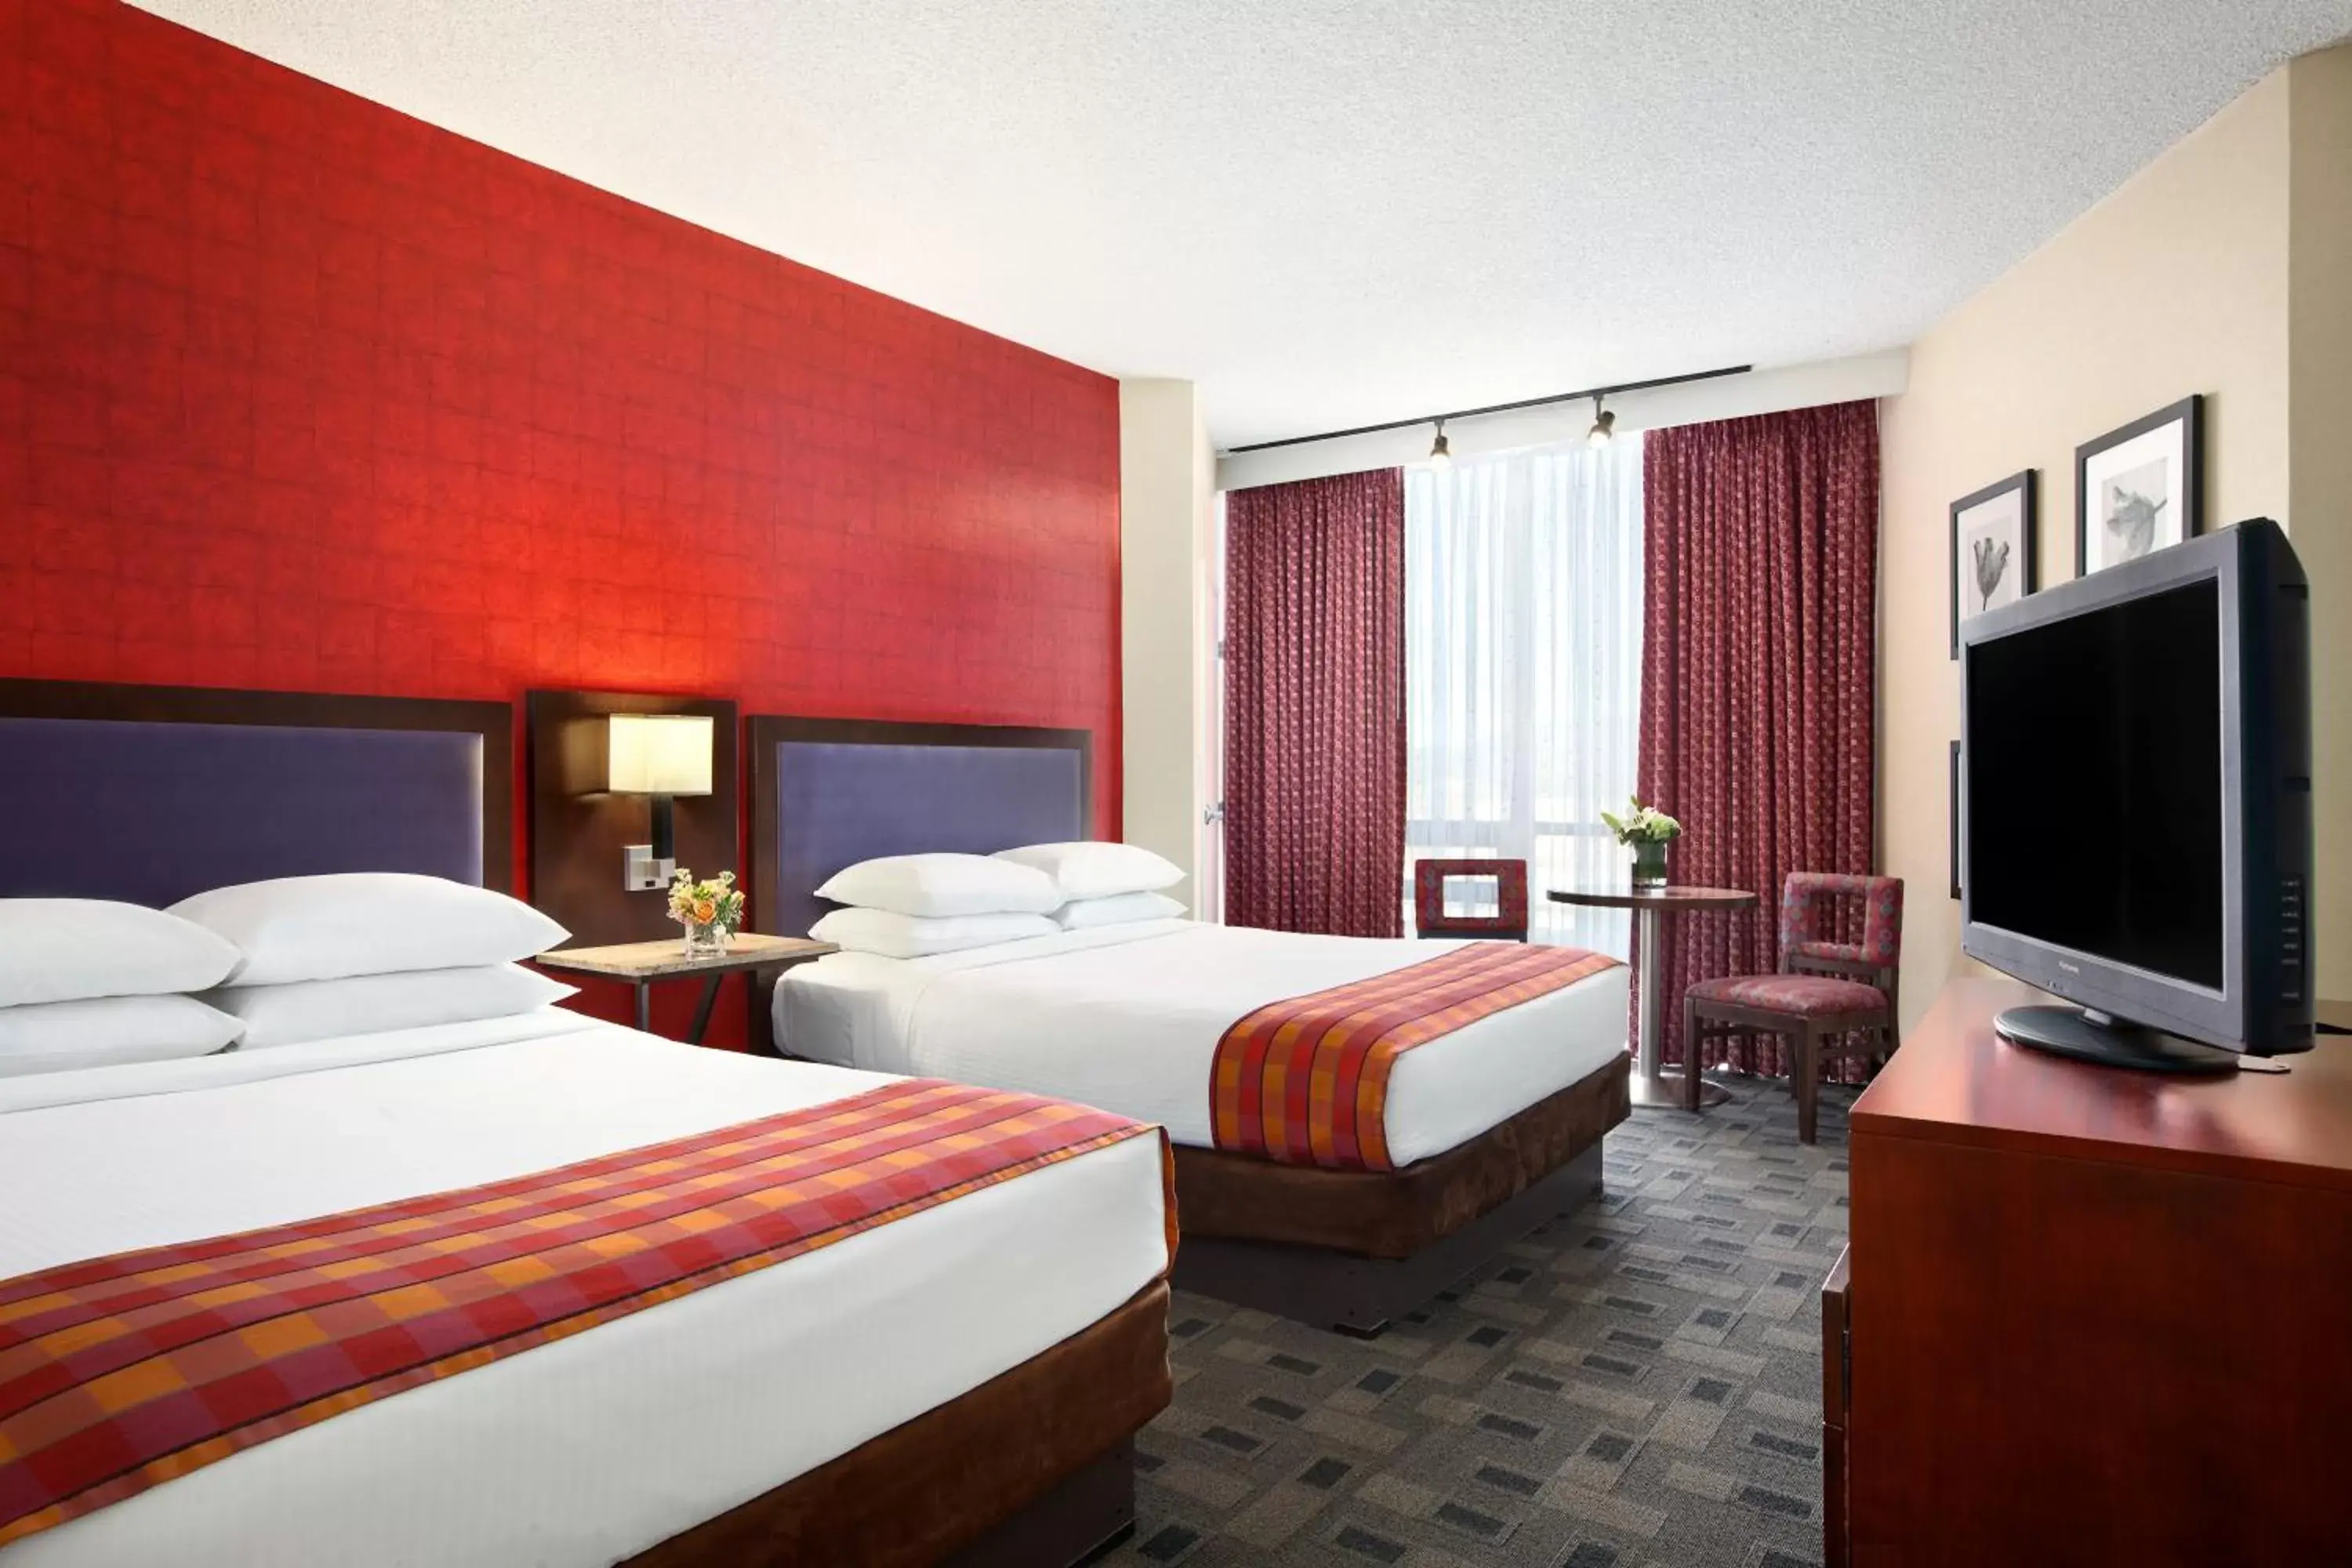 Bed, Room Photo in Harveys Lake Tahoe Hotel & Casino